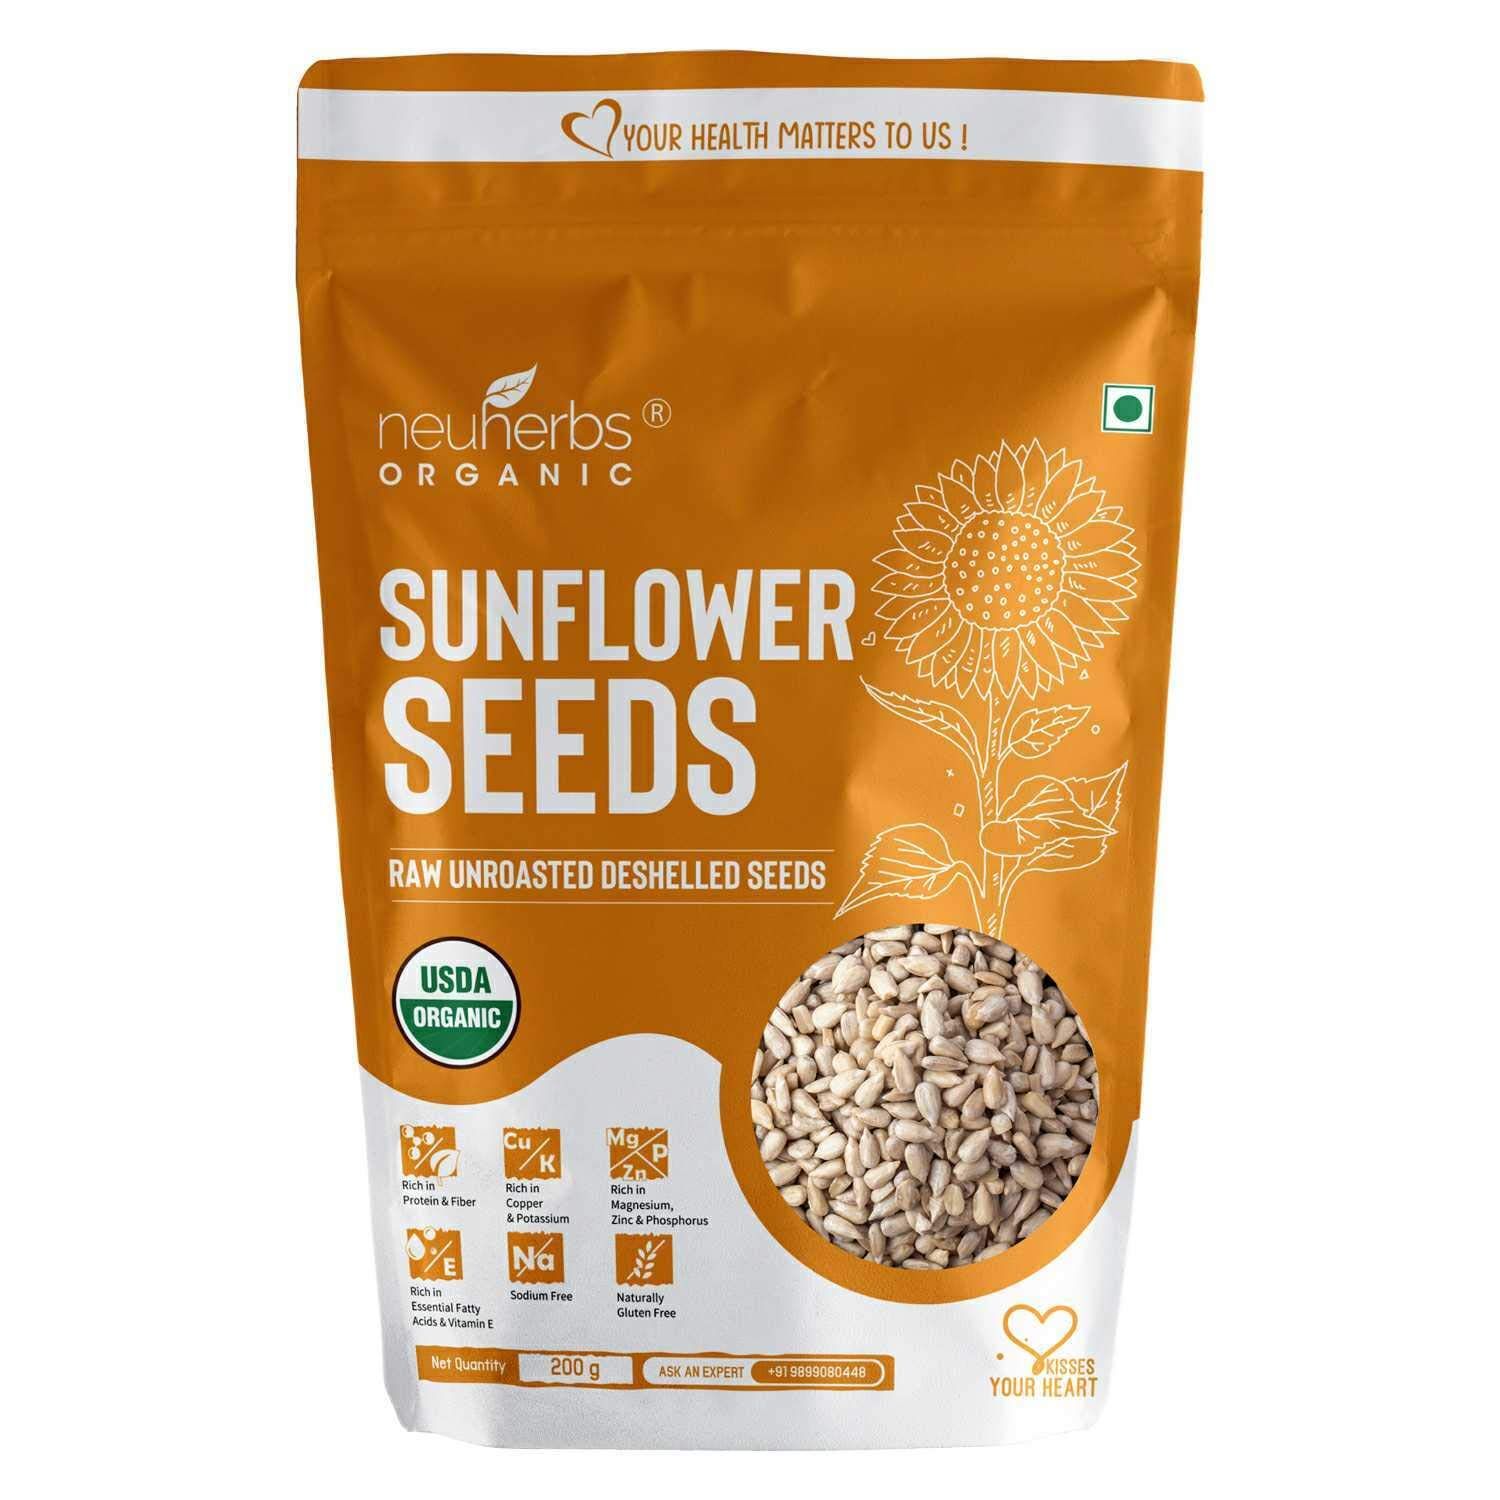 Neuherbs Sunflower Seeds Image